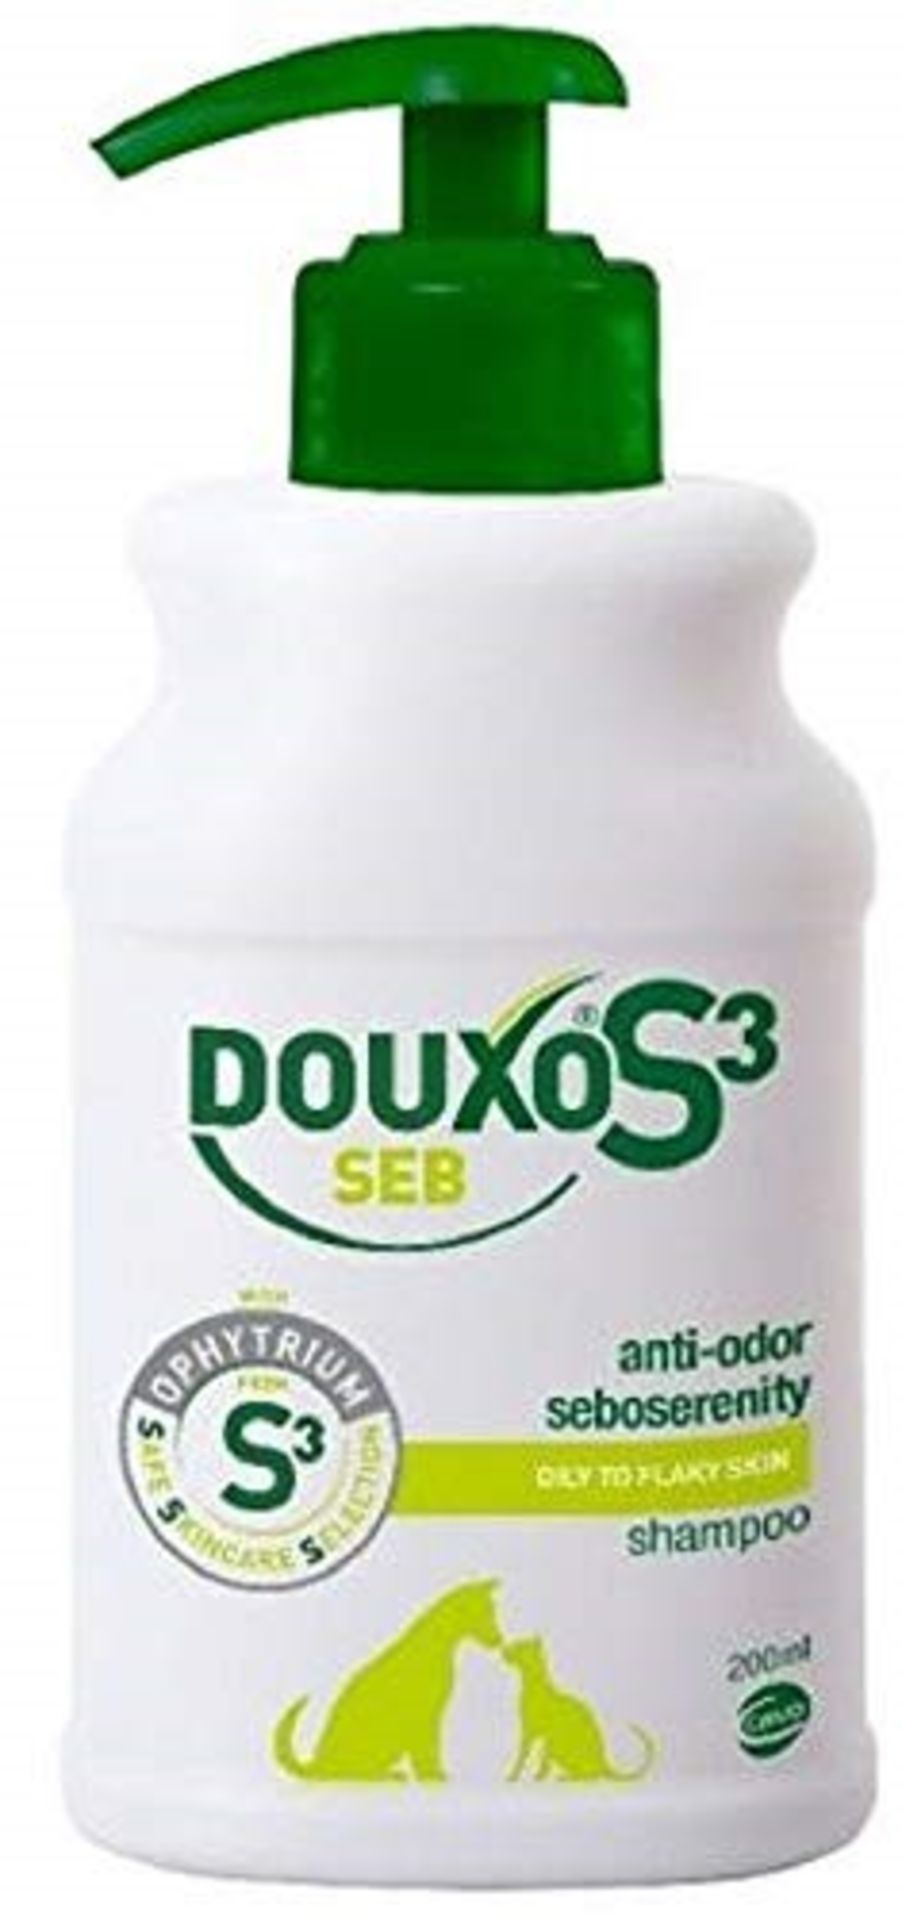 Douxo S3 Seb Anti-dandruff Dog and Cat Shampoo, 200ml